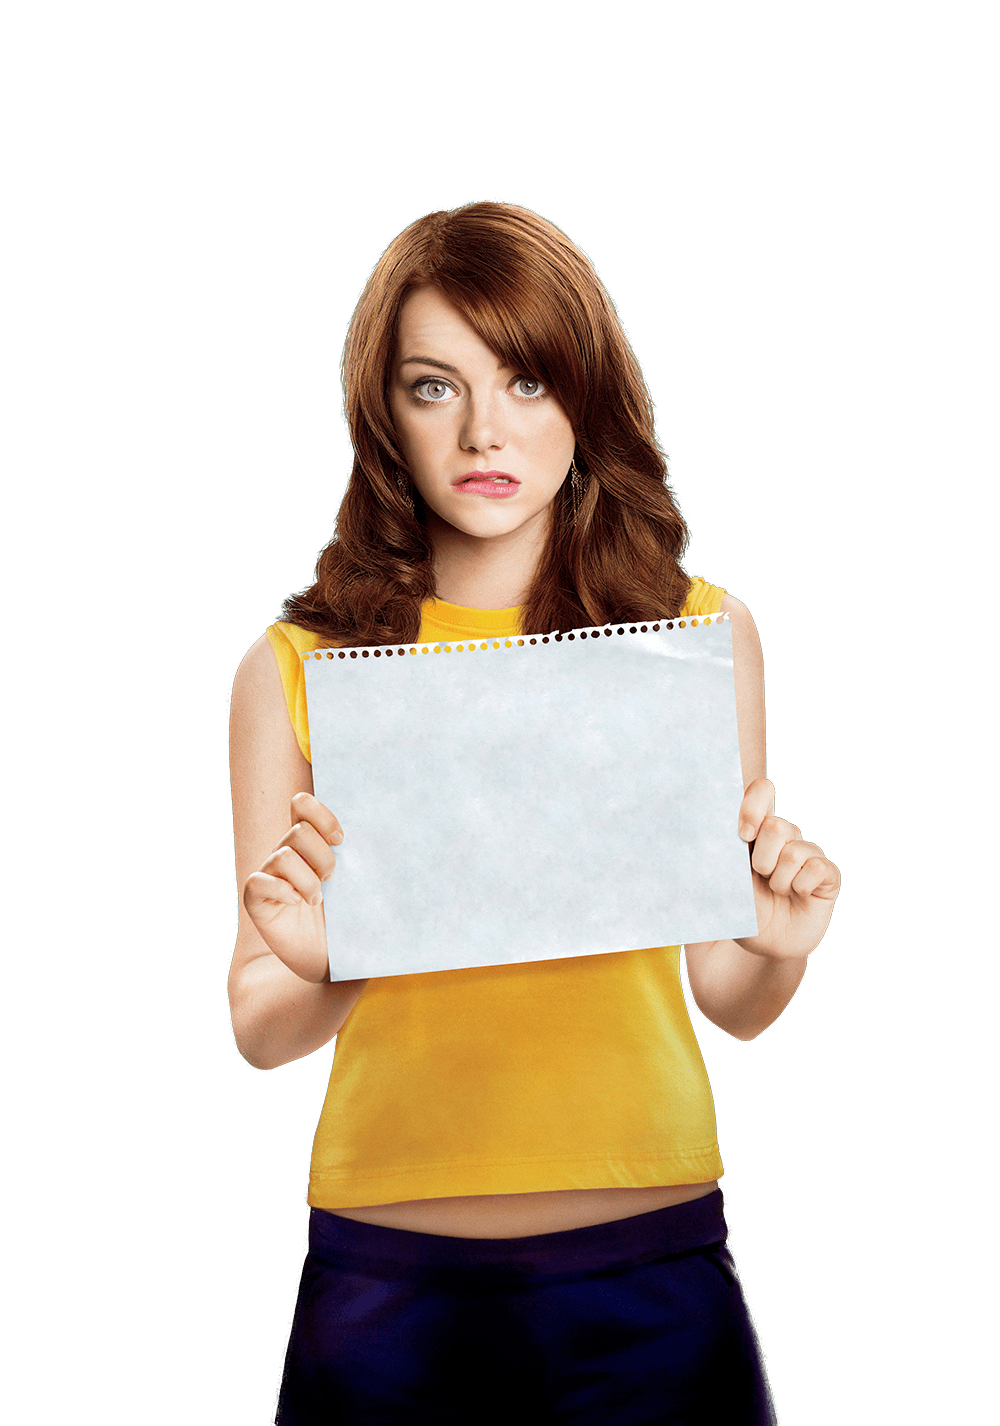 Emma Stone Holding Paper